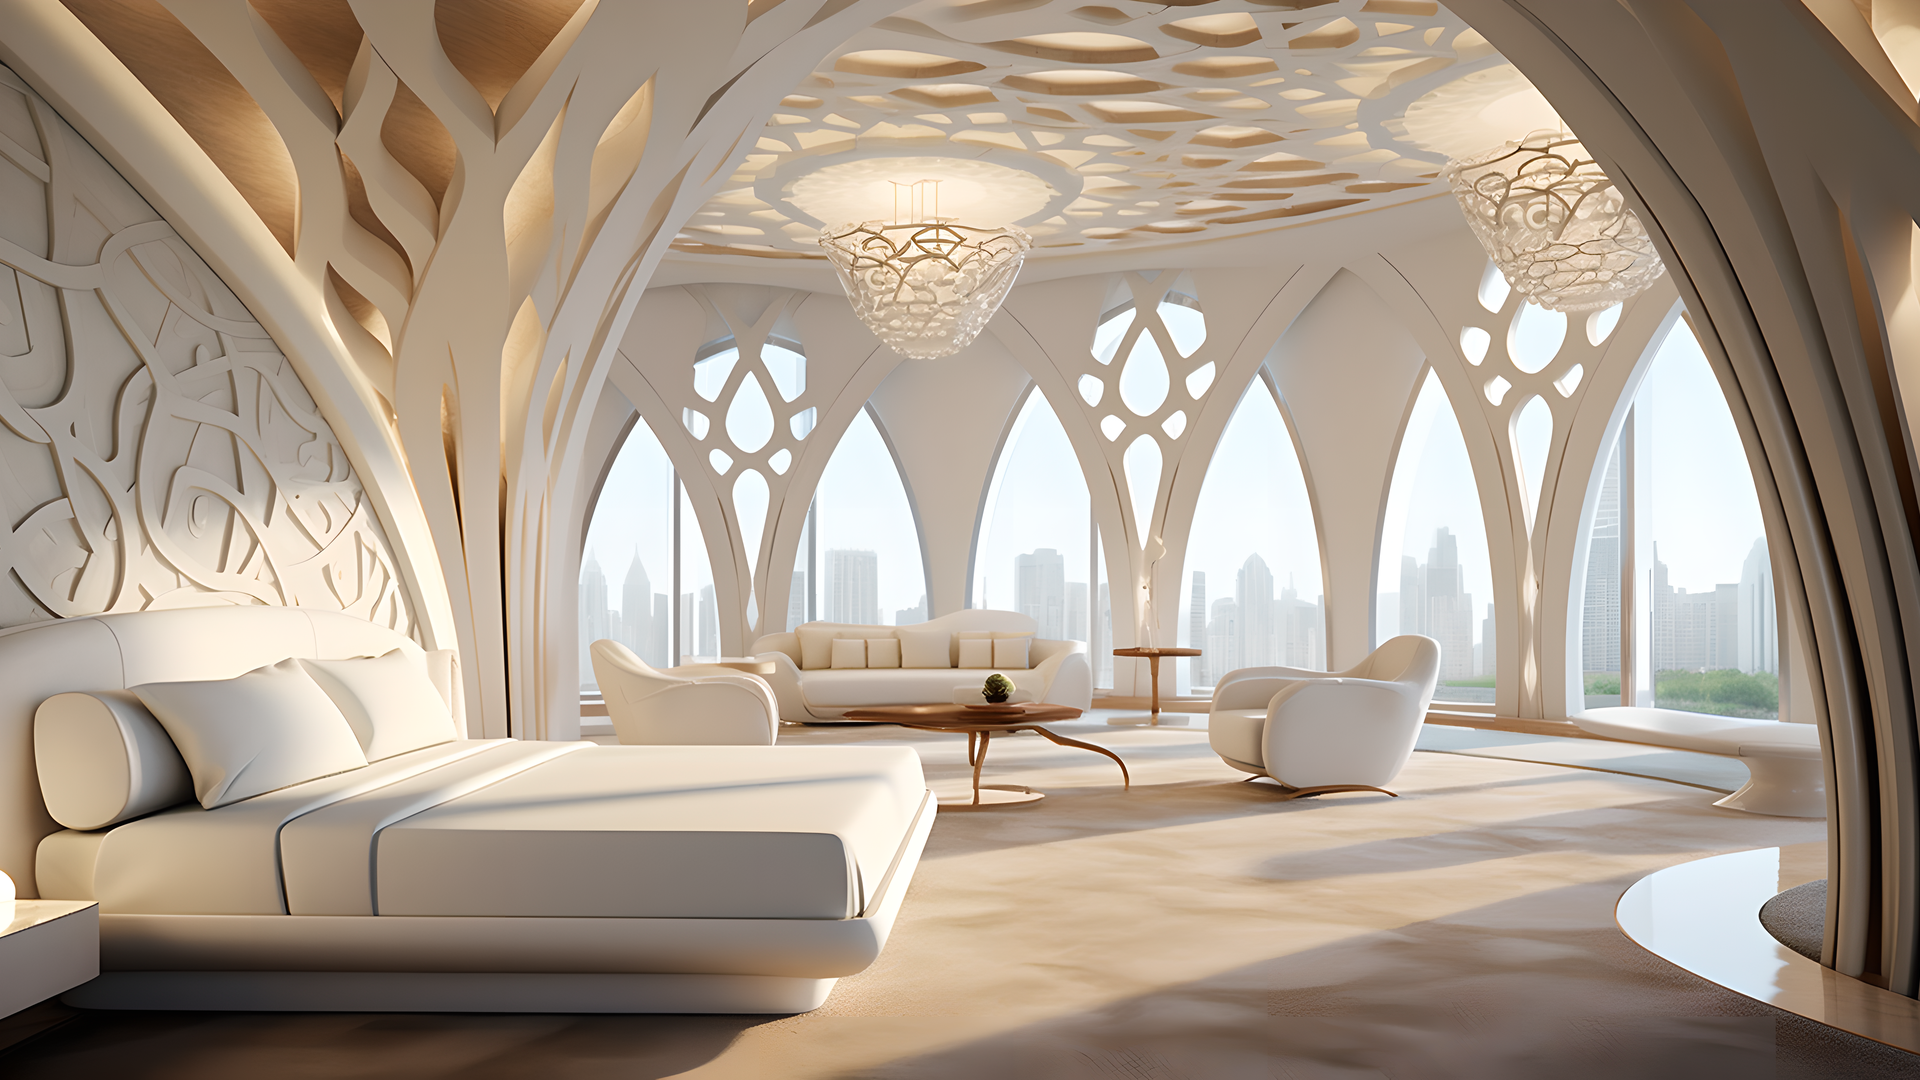 Interiorismo, arquitectura árabe y luz natural